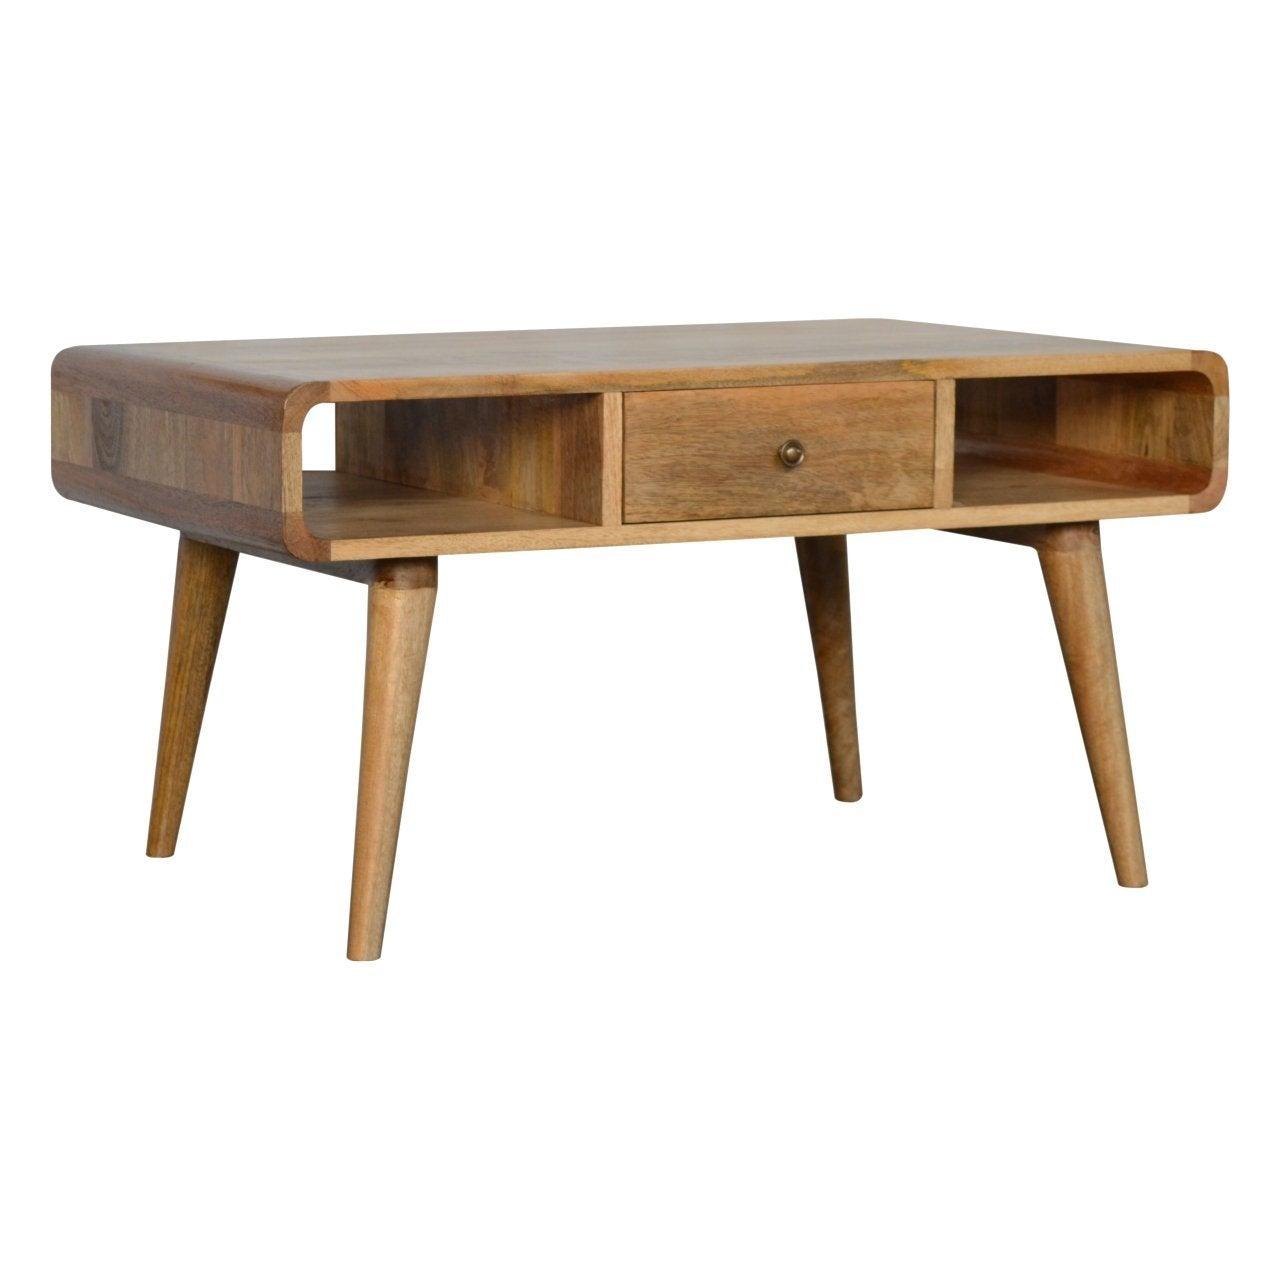 Curved oak-ish coffee table - crimblefest furniture - image 3